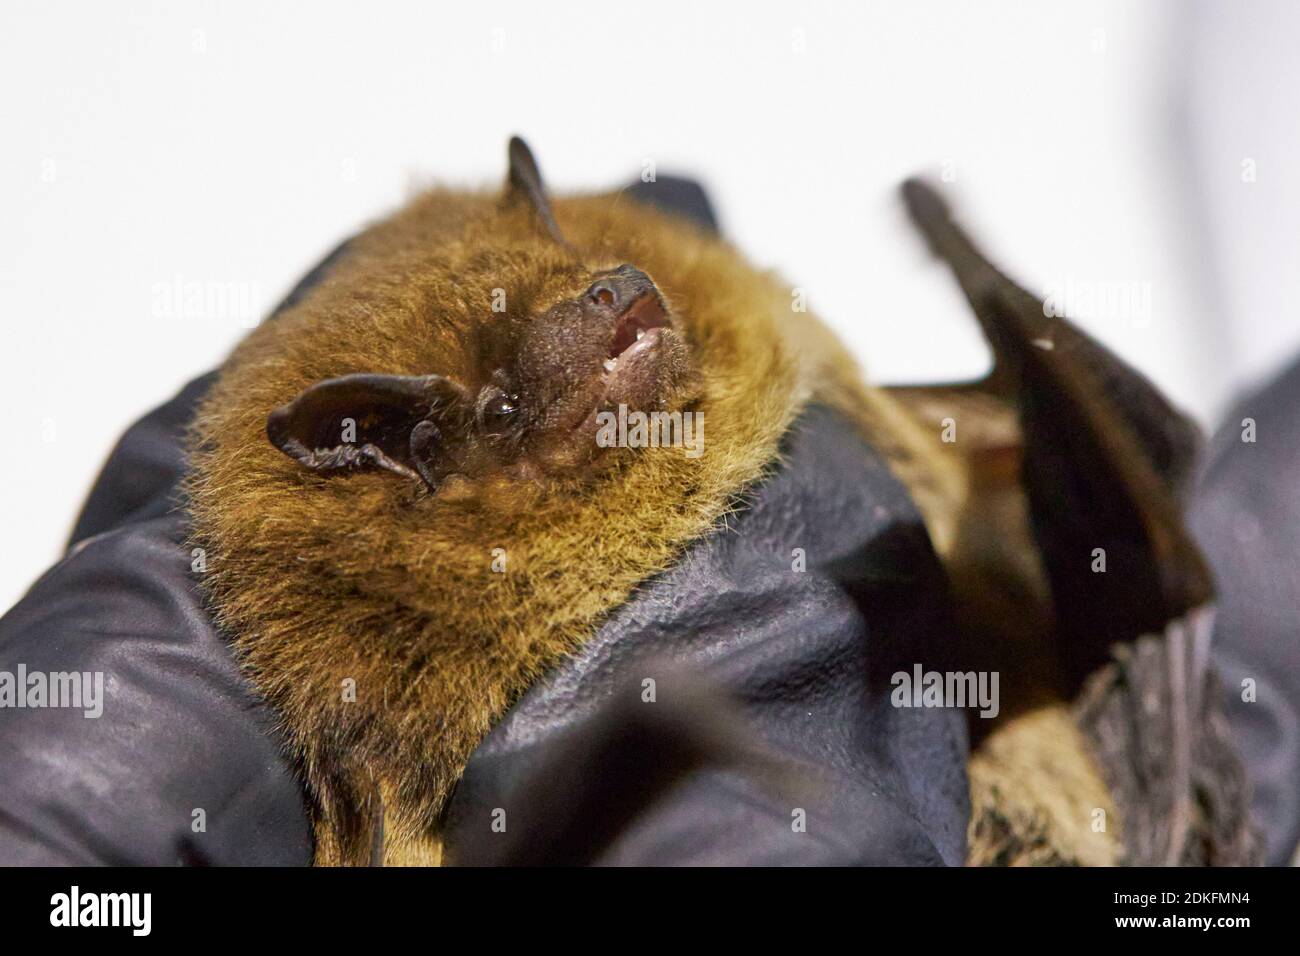 Bat, rough-skin bat, Pipistrellus nathusii, head, research Stock Photo